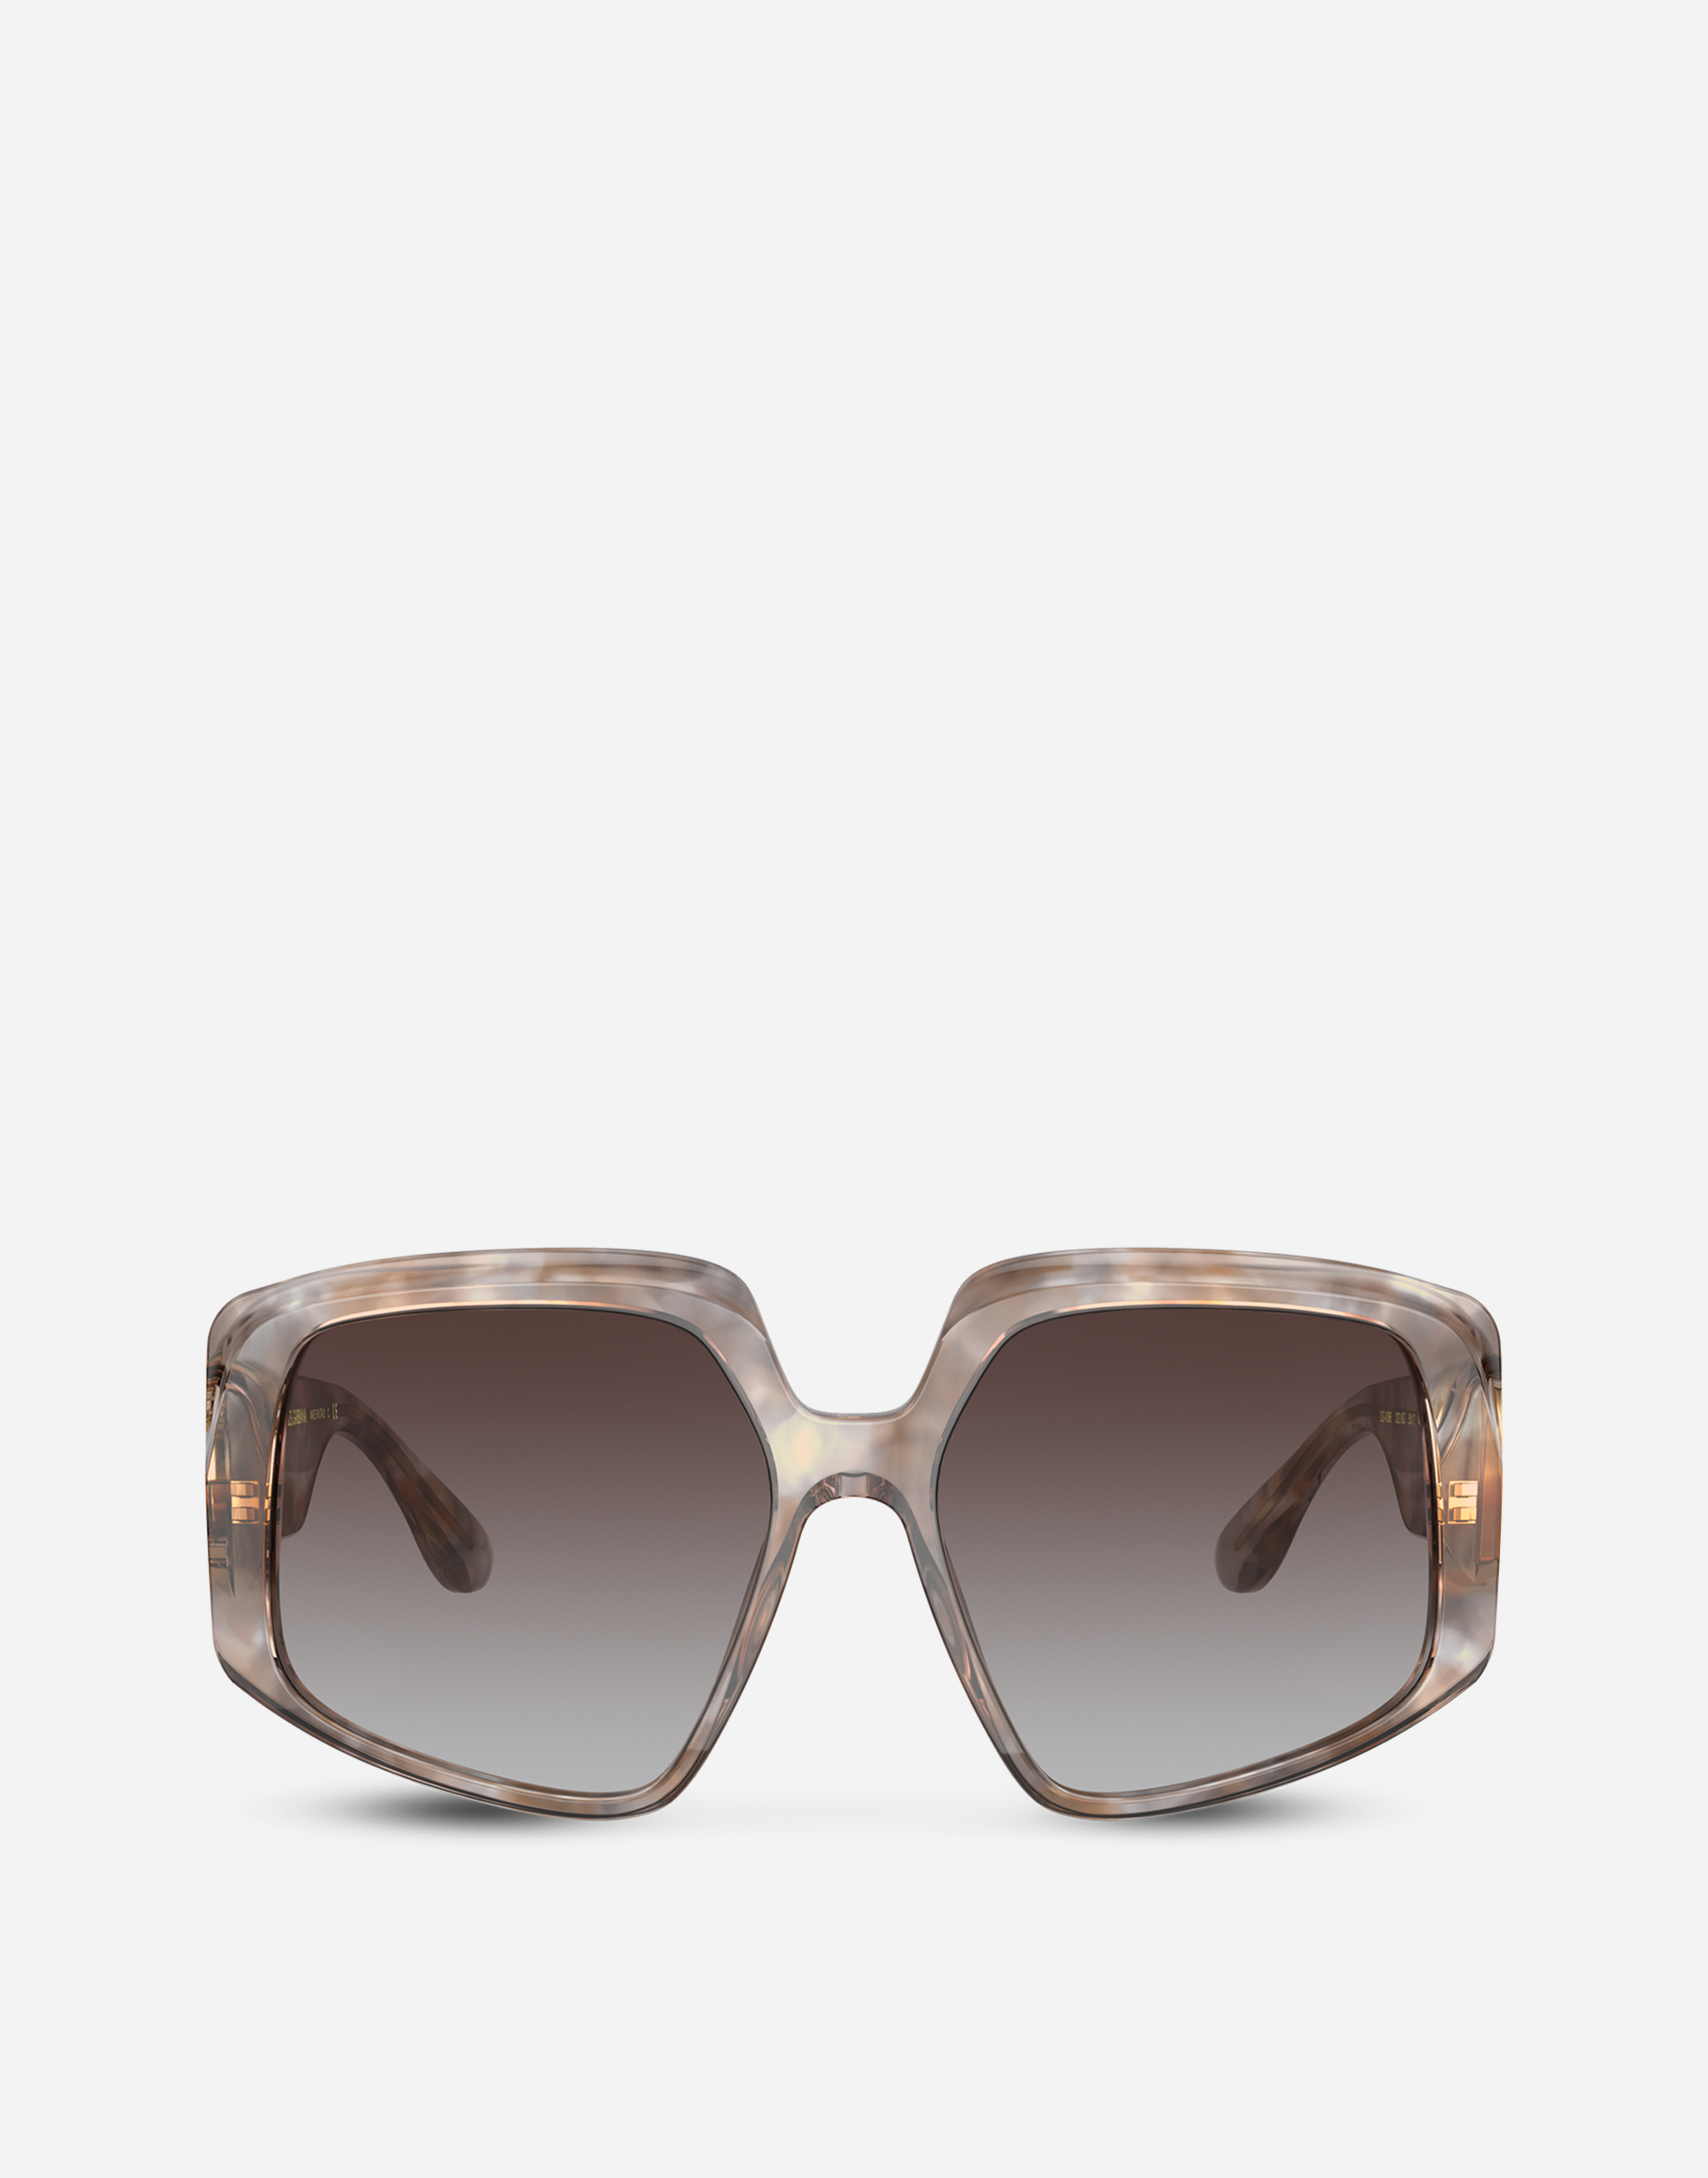 DG crossed sunglasses  in Grey havana